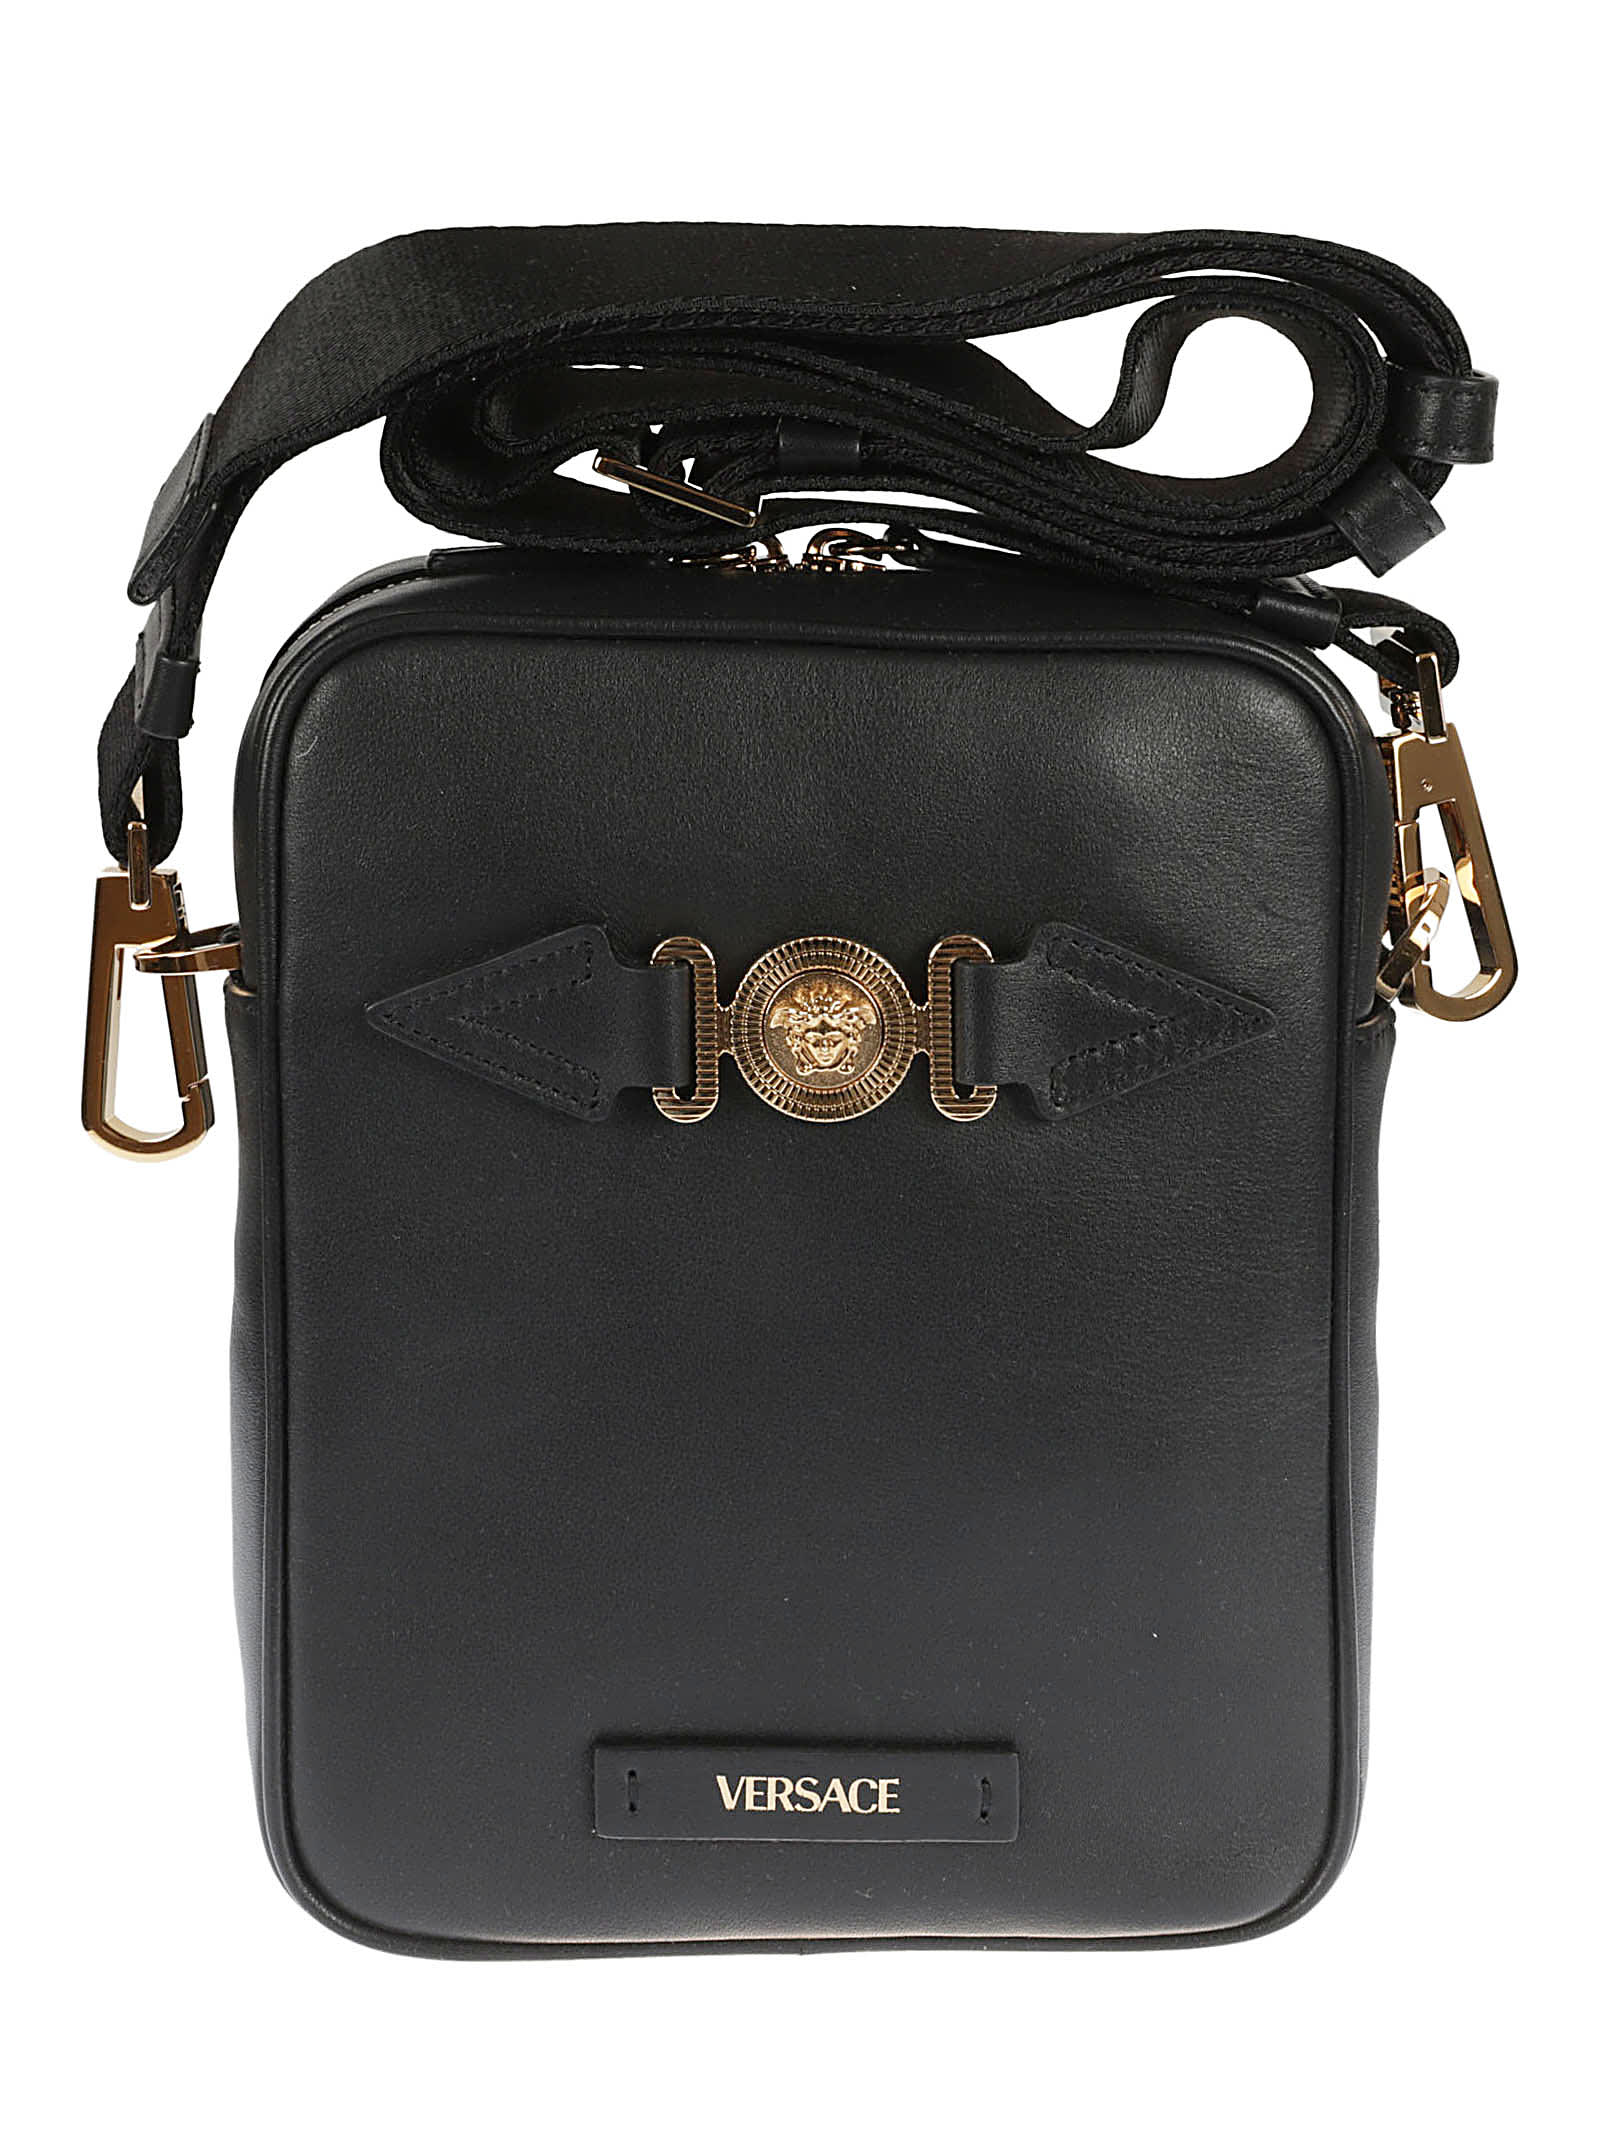 Versace La Medusa Mini Leather Bag In Black/gold